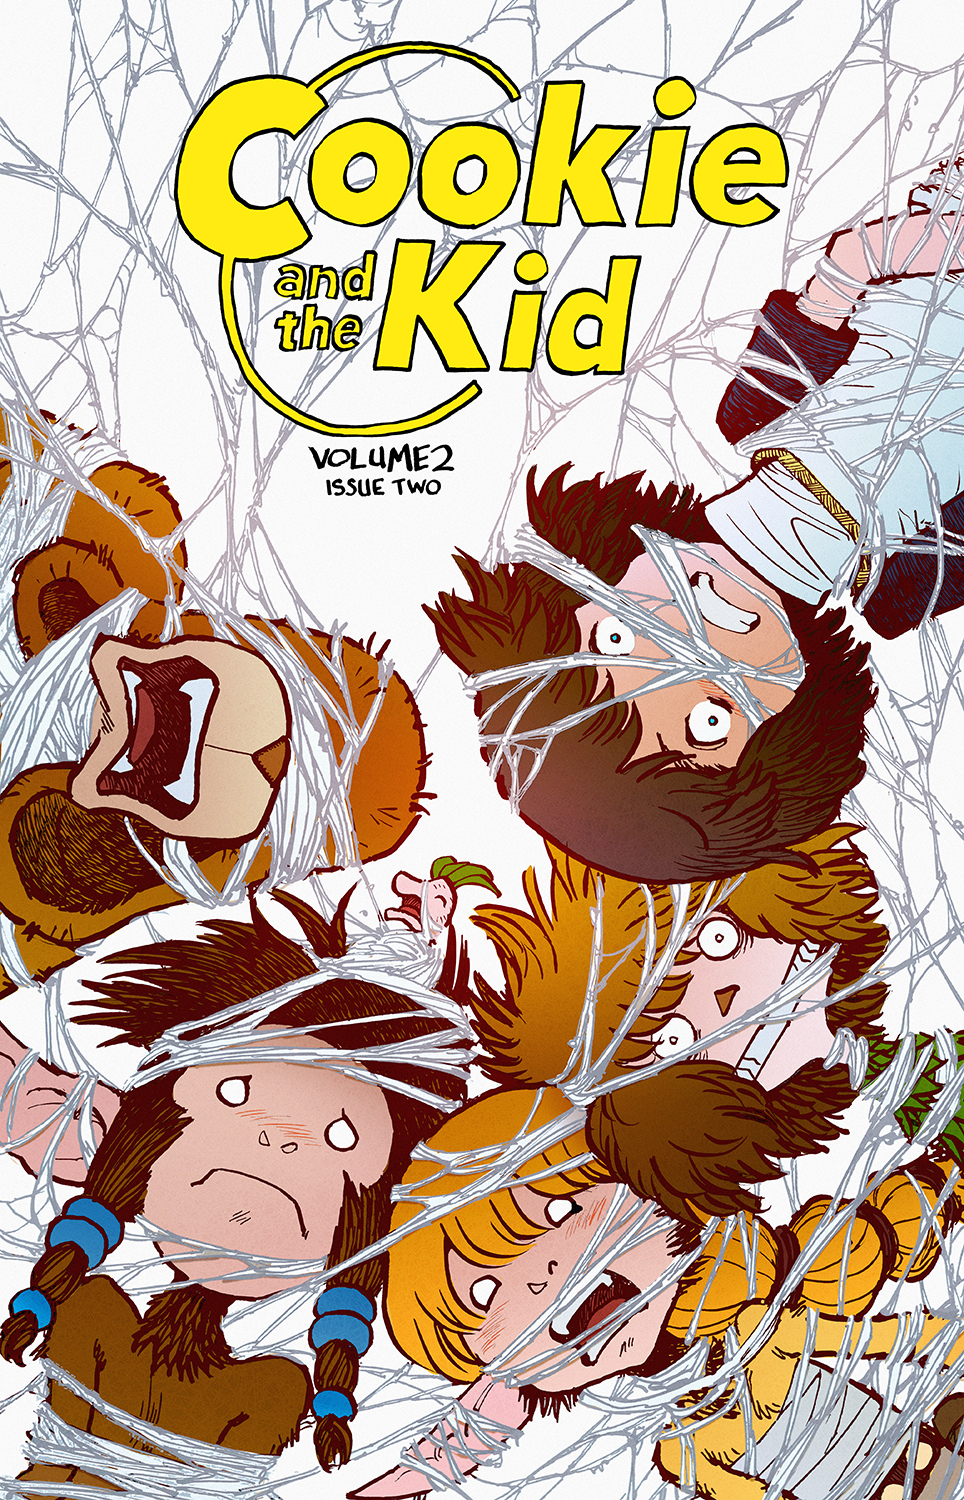 Cookie & Kid Volume 2 #2